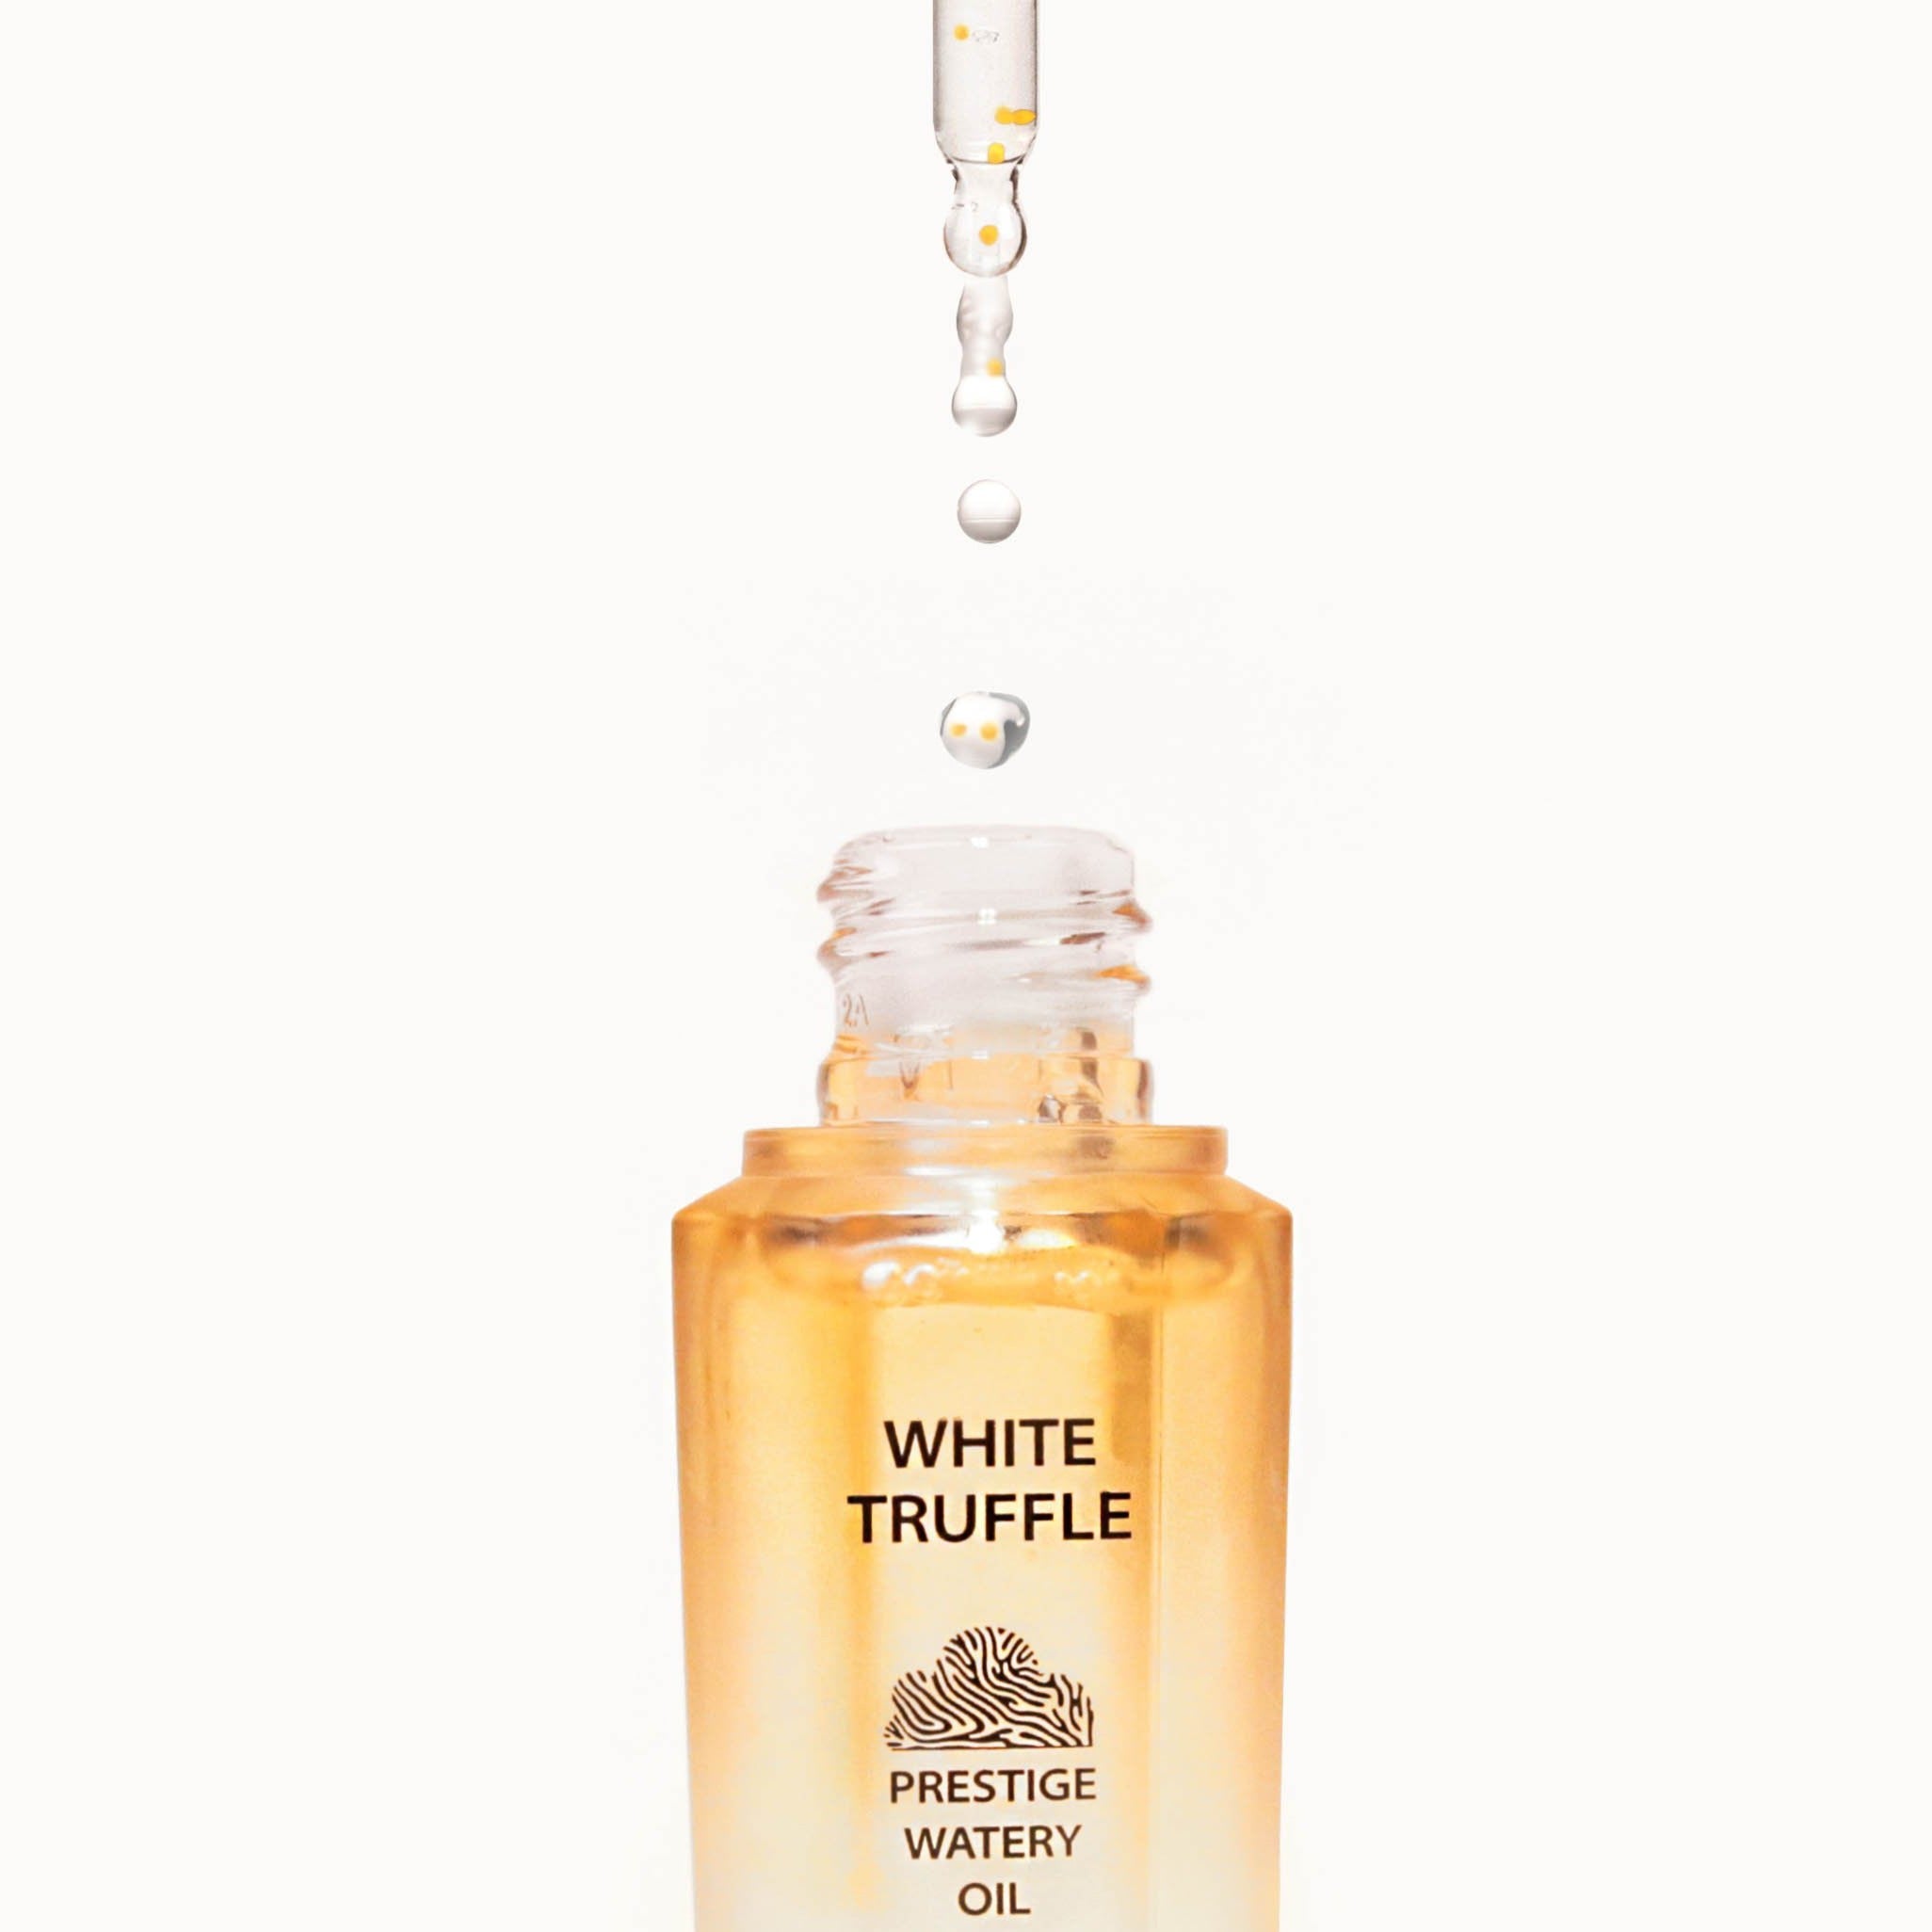 White Truffle Prestige Watery Oil D'Alba Piedmont - 30ml - NuvoleBlu